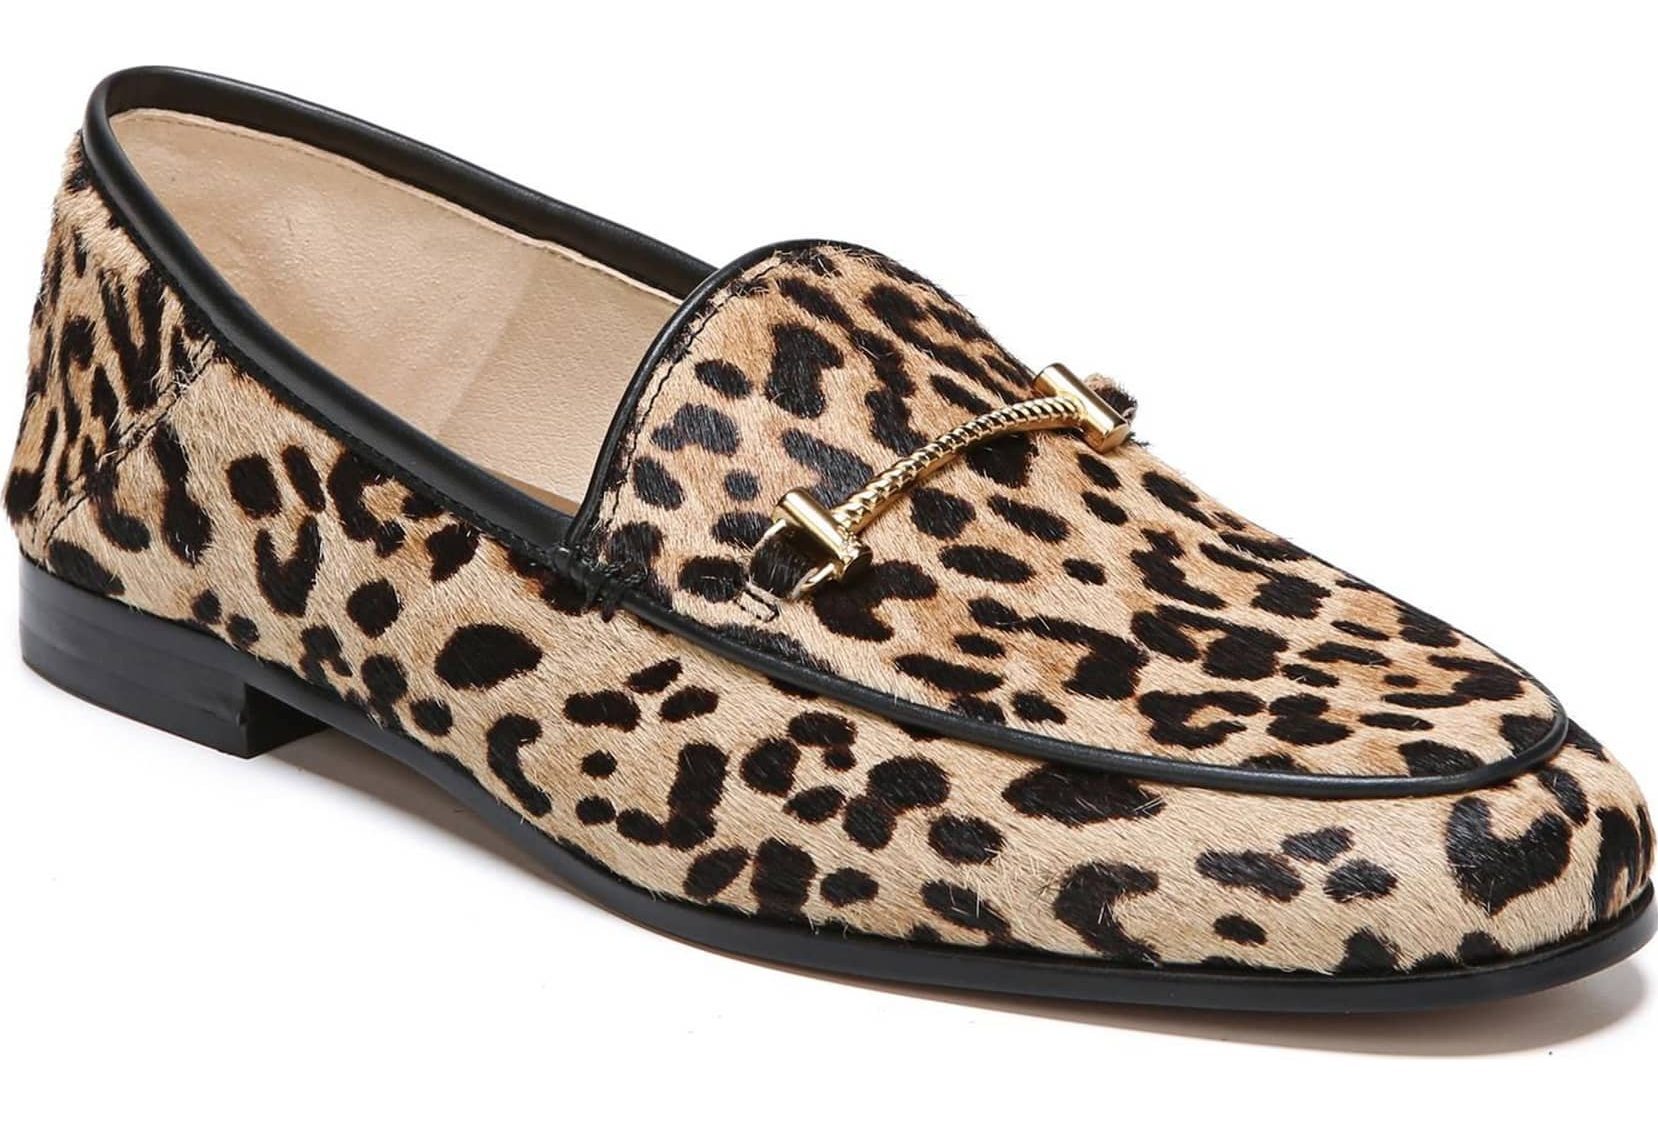 nordstrom leopard loafers